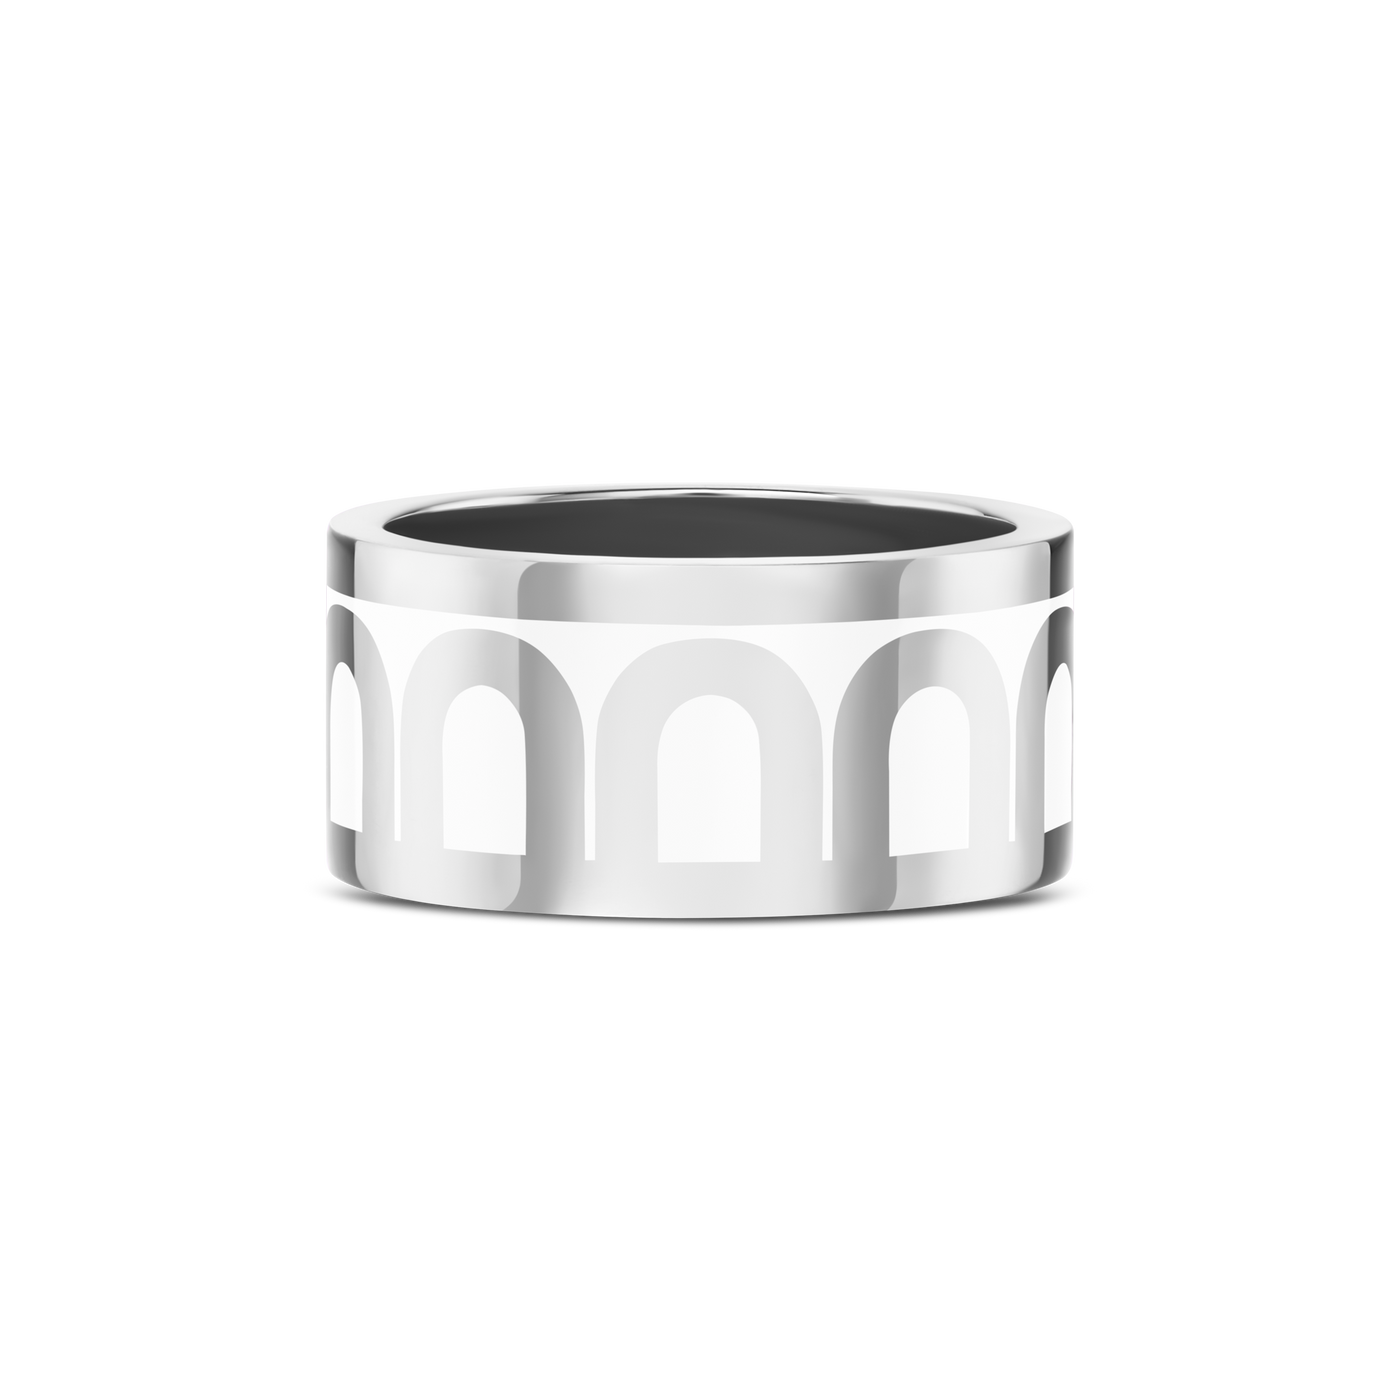 L'Arc de DAVIDOR Ring GM, 18k White Gold with Neige Lacquered Ceramic - DAVIDOR